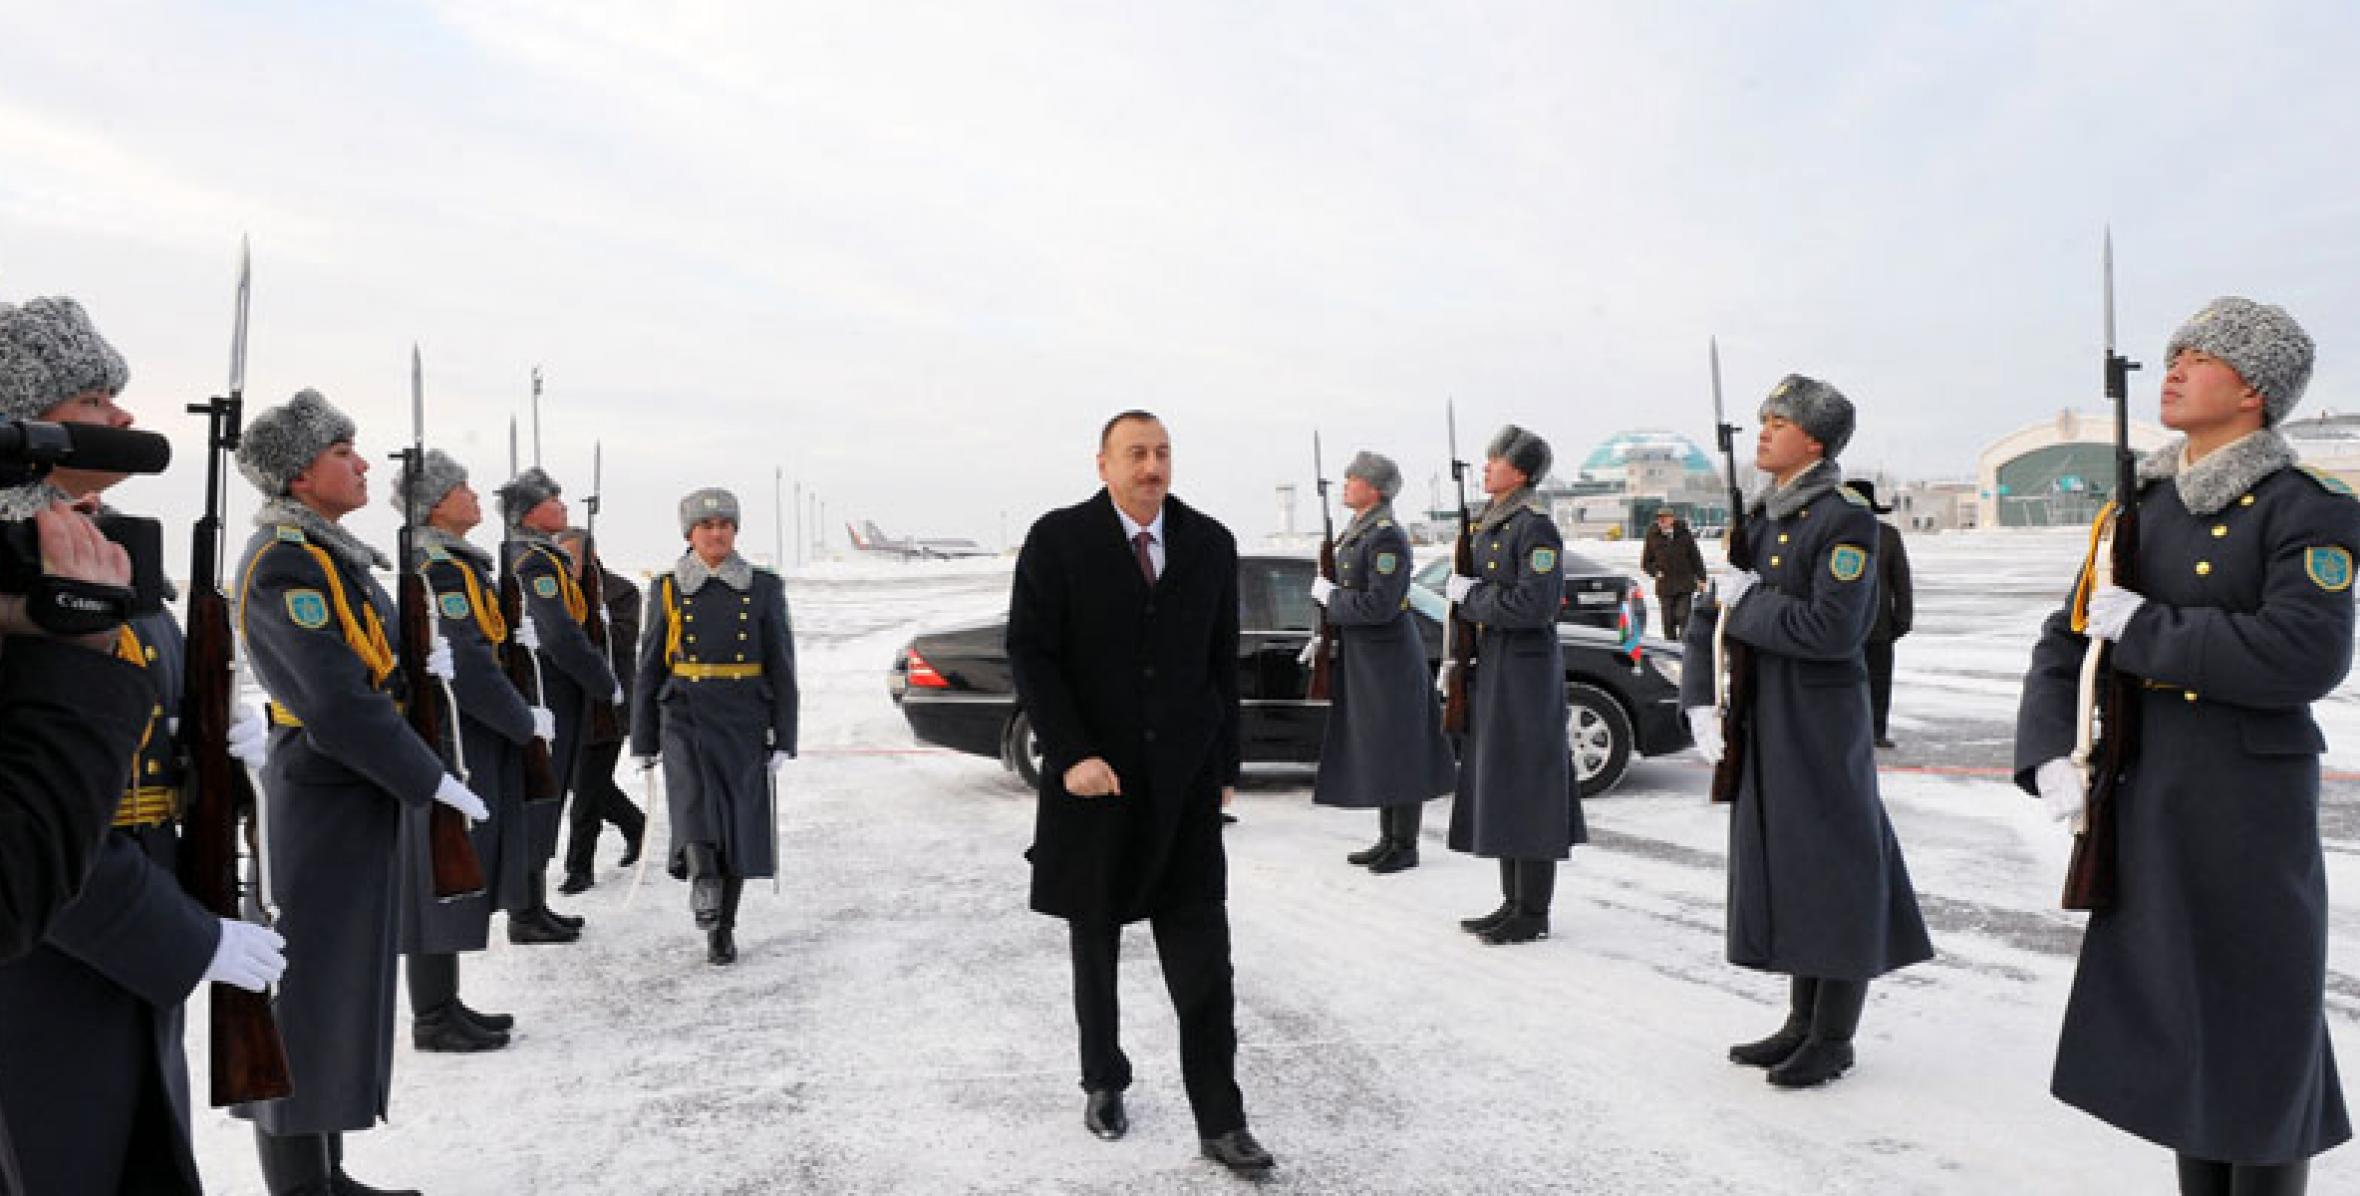 Visit of Ilham Aliyev to Kazakhstan ended